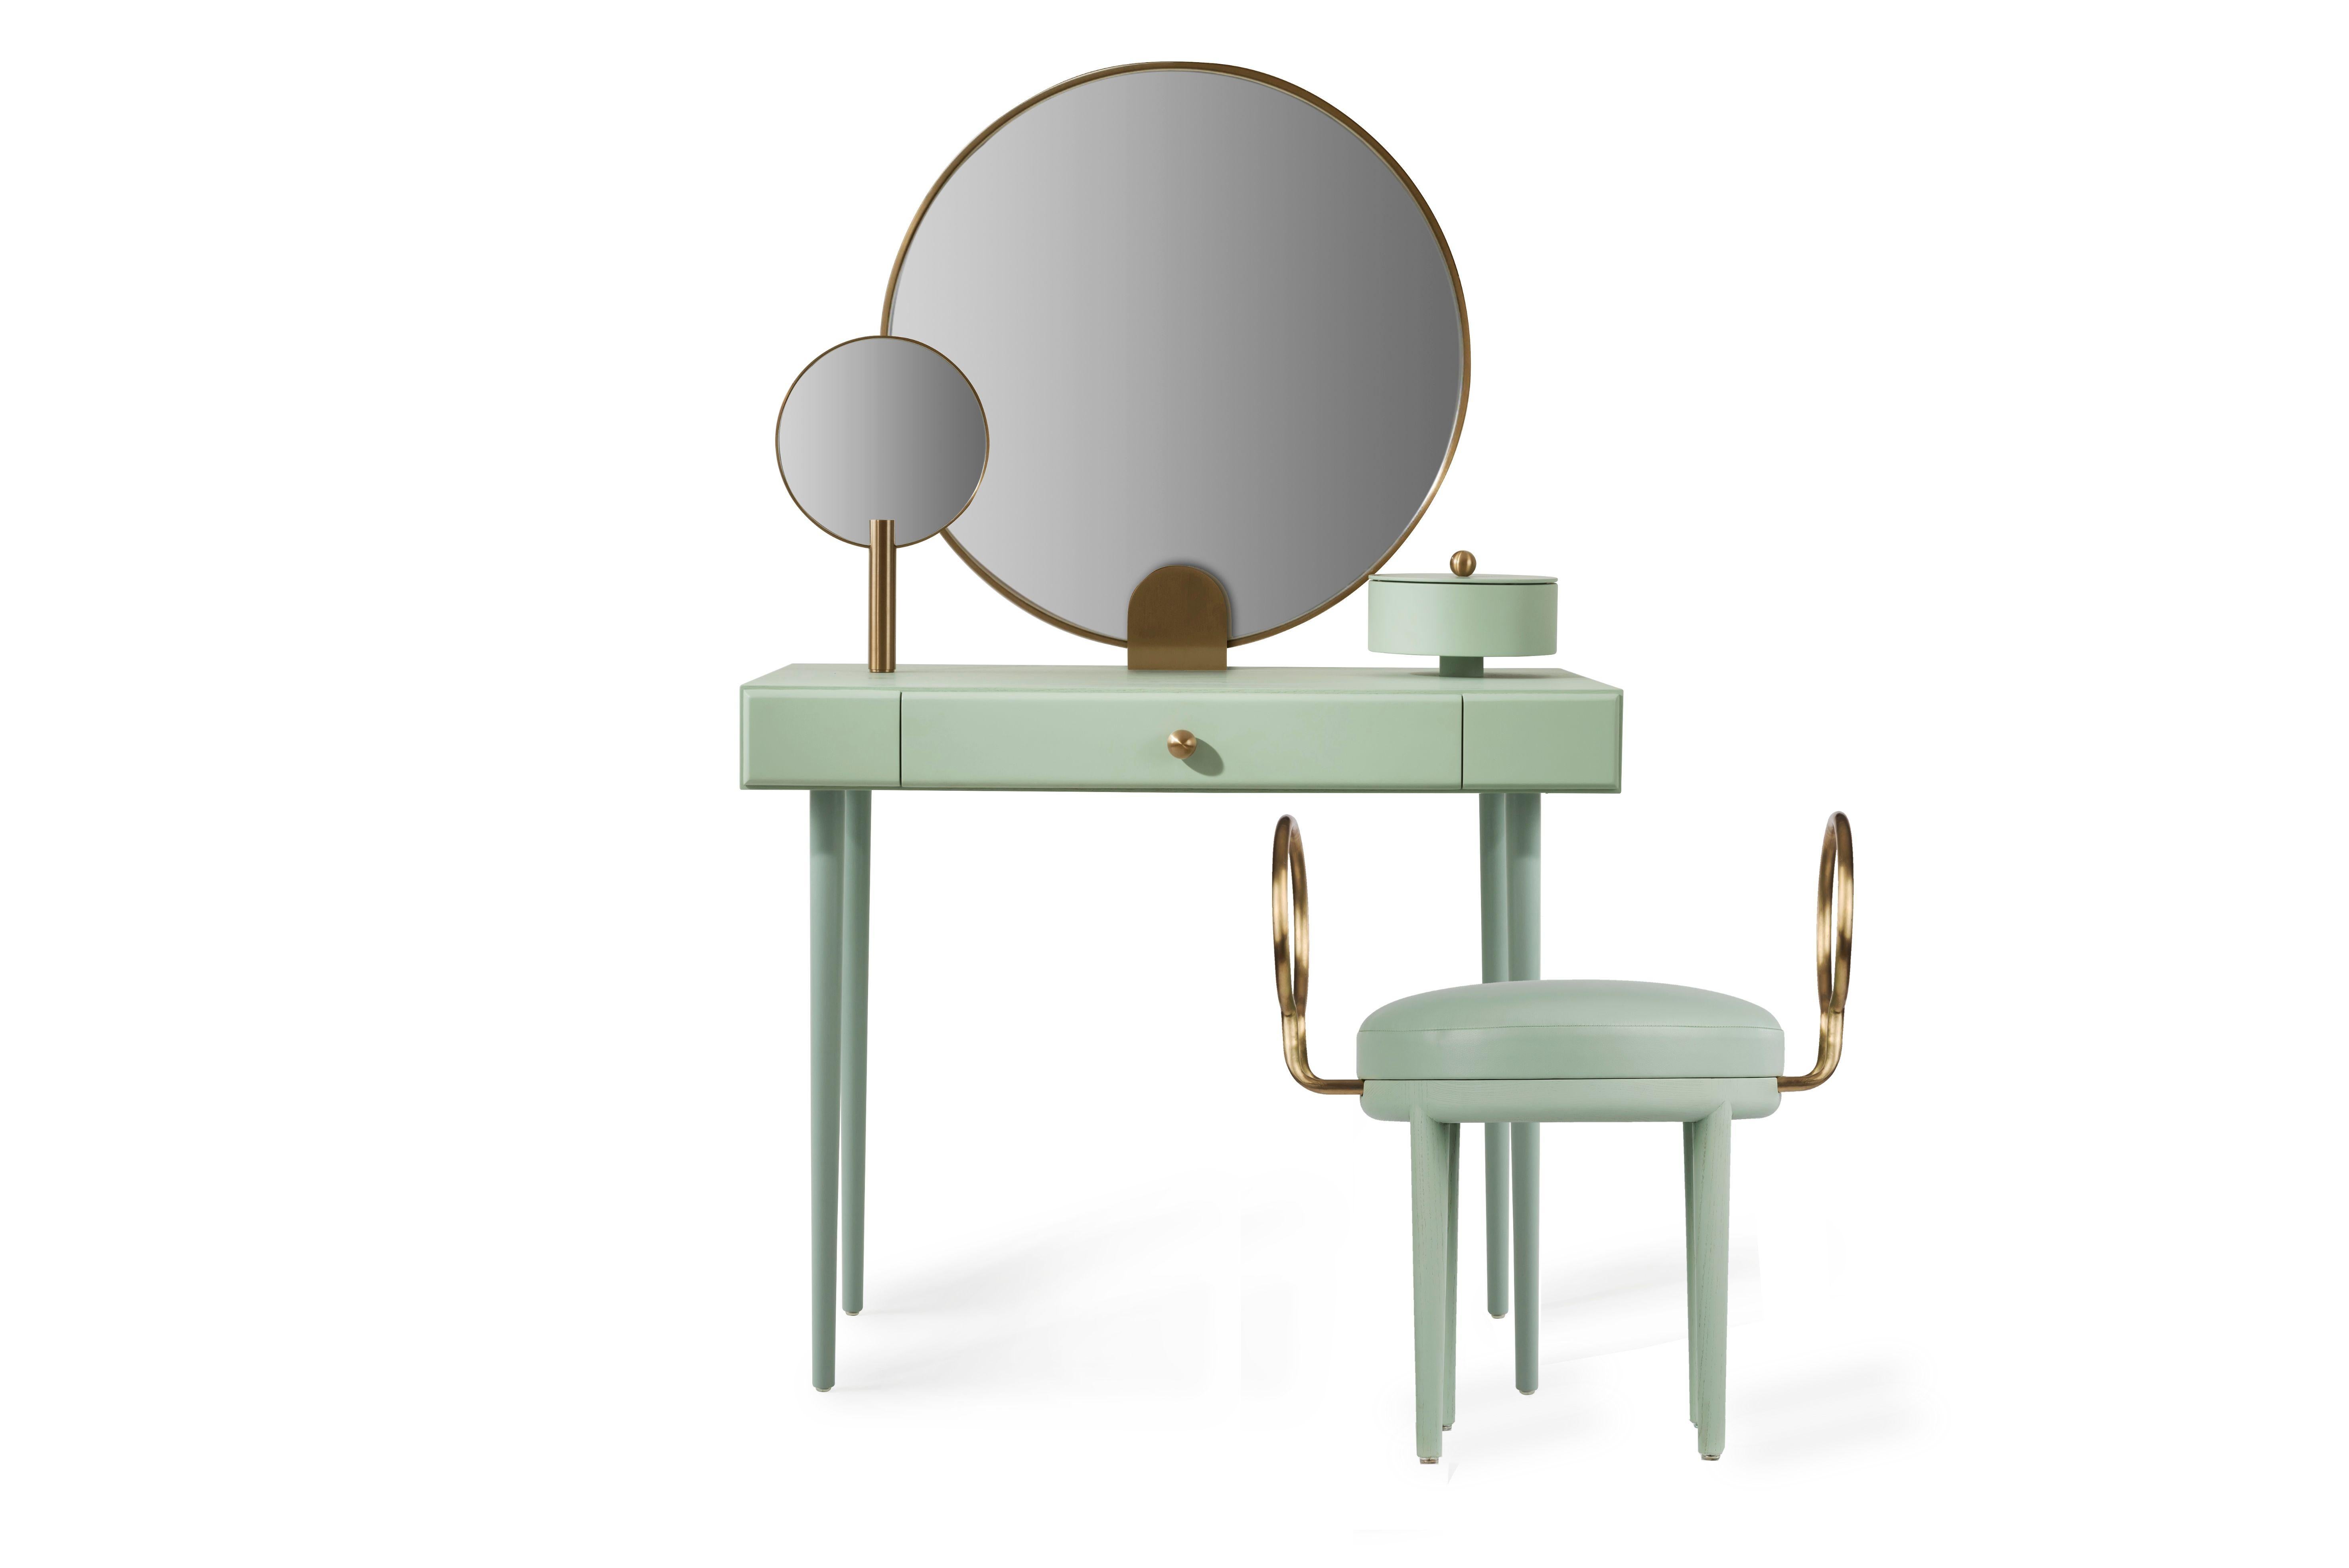 Rose Selavy vanity desk with stool by Thomas Dariel, Maison Dada
Measures: Vanity desk • W 94 x D 59 x H 139.5 cm
Stool • W 57 x D 43 x H 64 cm
Desktop in painted ash veneer • fronts in matte paint finish
Structure in MDF • Metal legs with